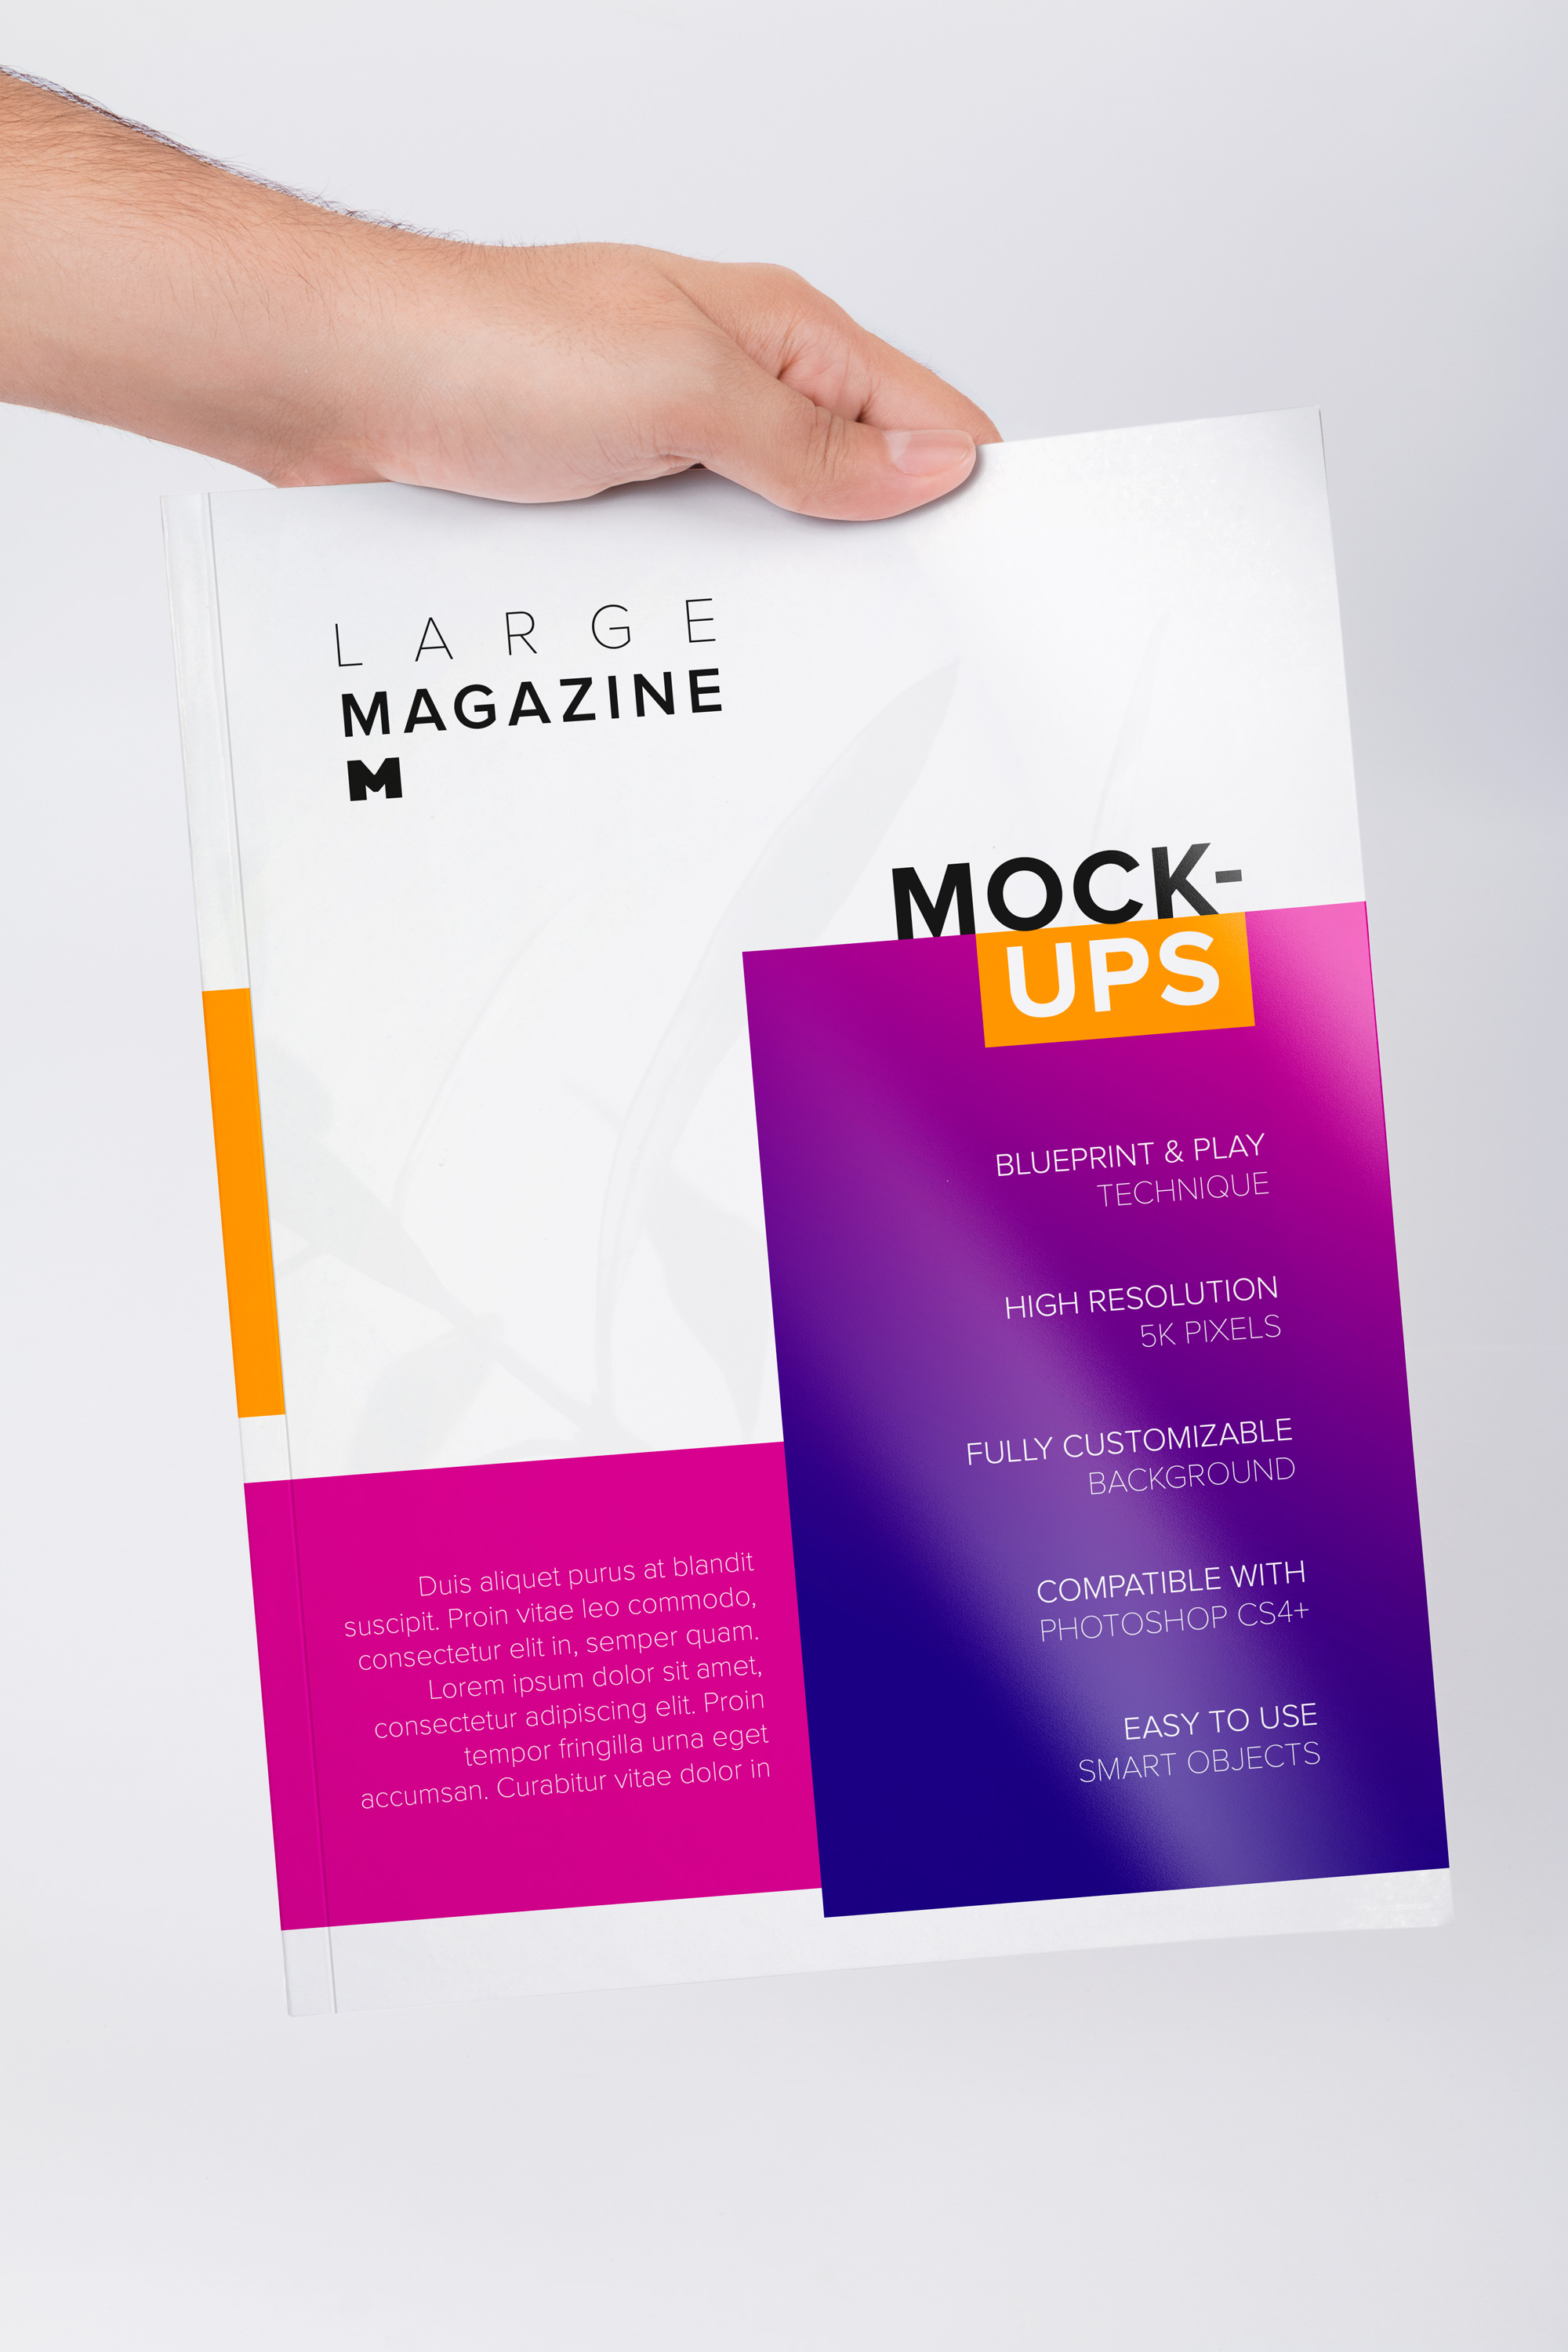 大型杂志封面设计效果图样机04 Large Magazine Cover Mockup 04插图(1)